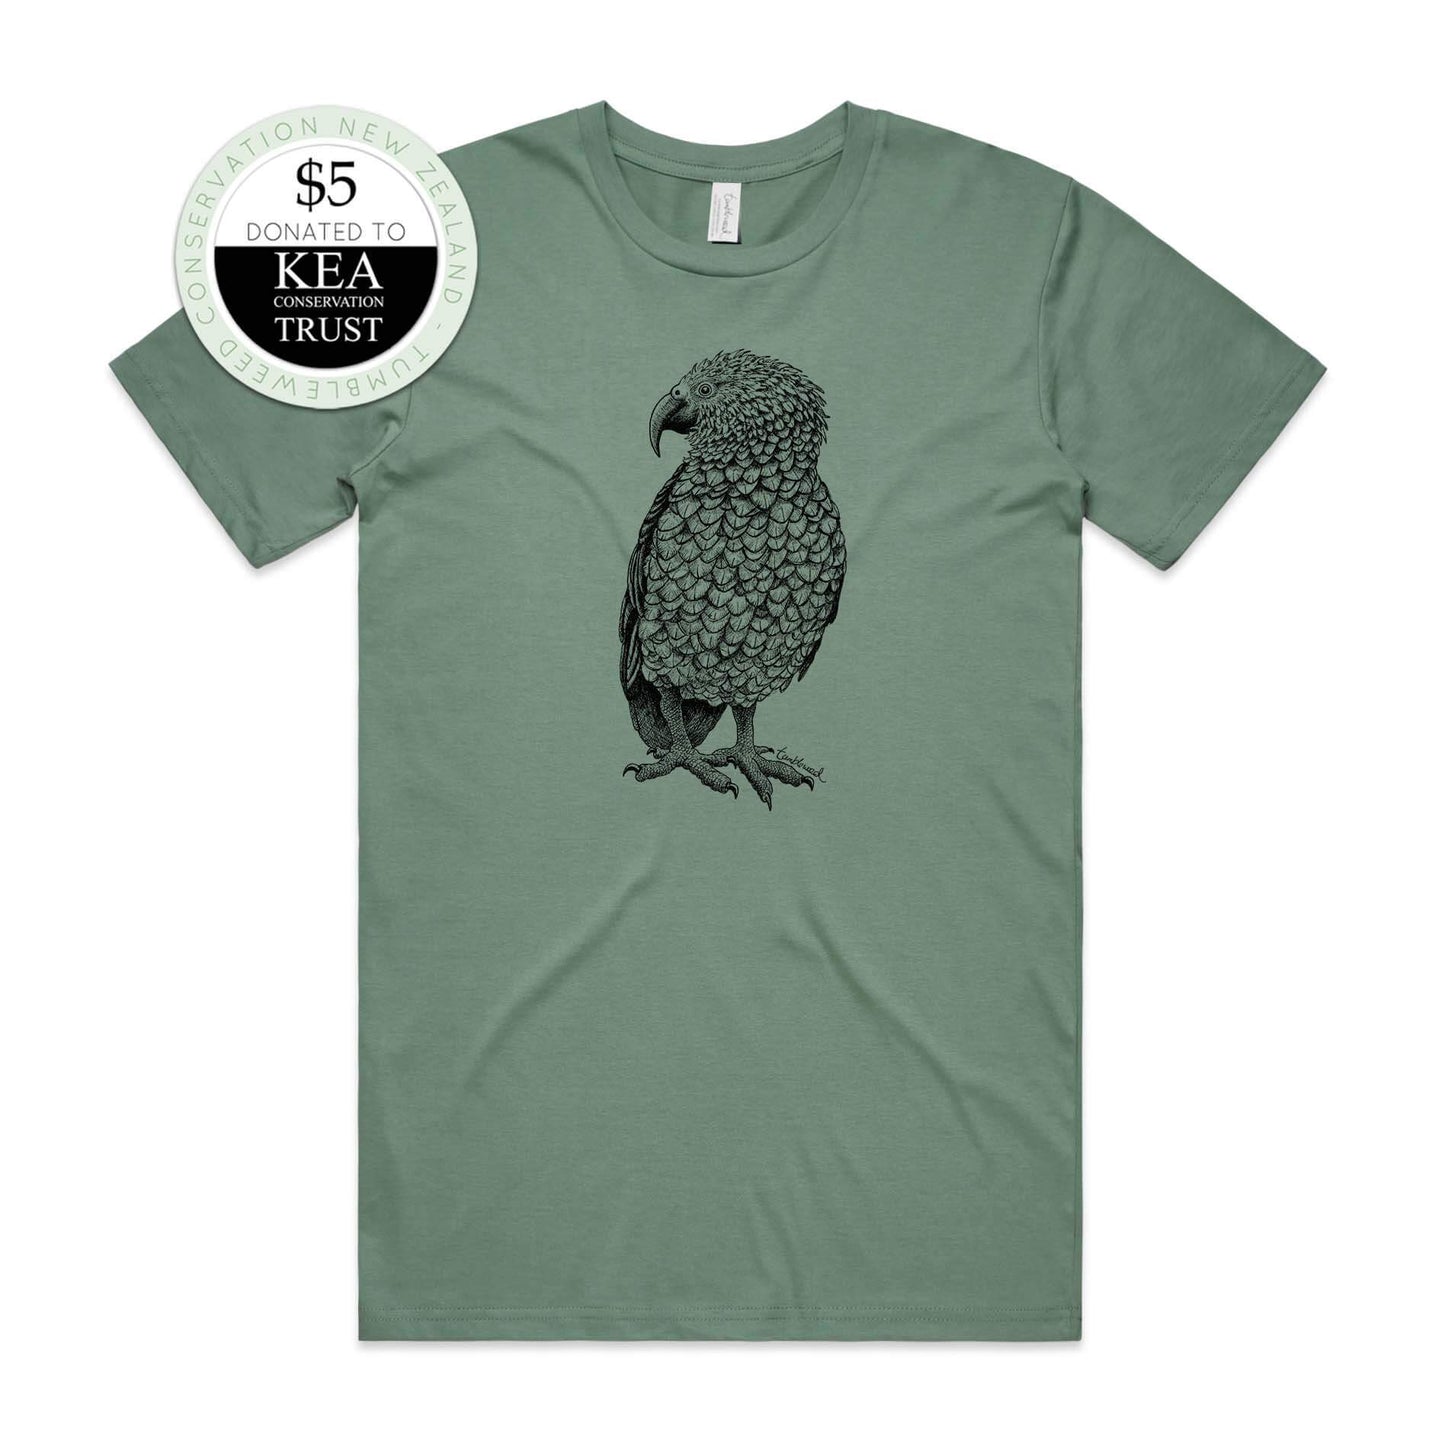 Sage, female t-shirt featuring a screen printed kea design.